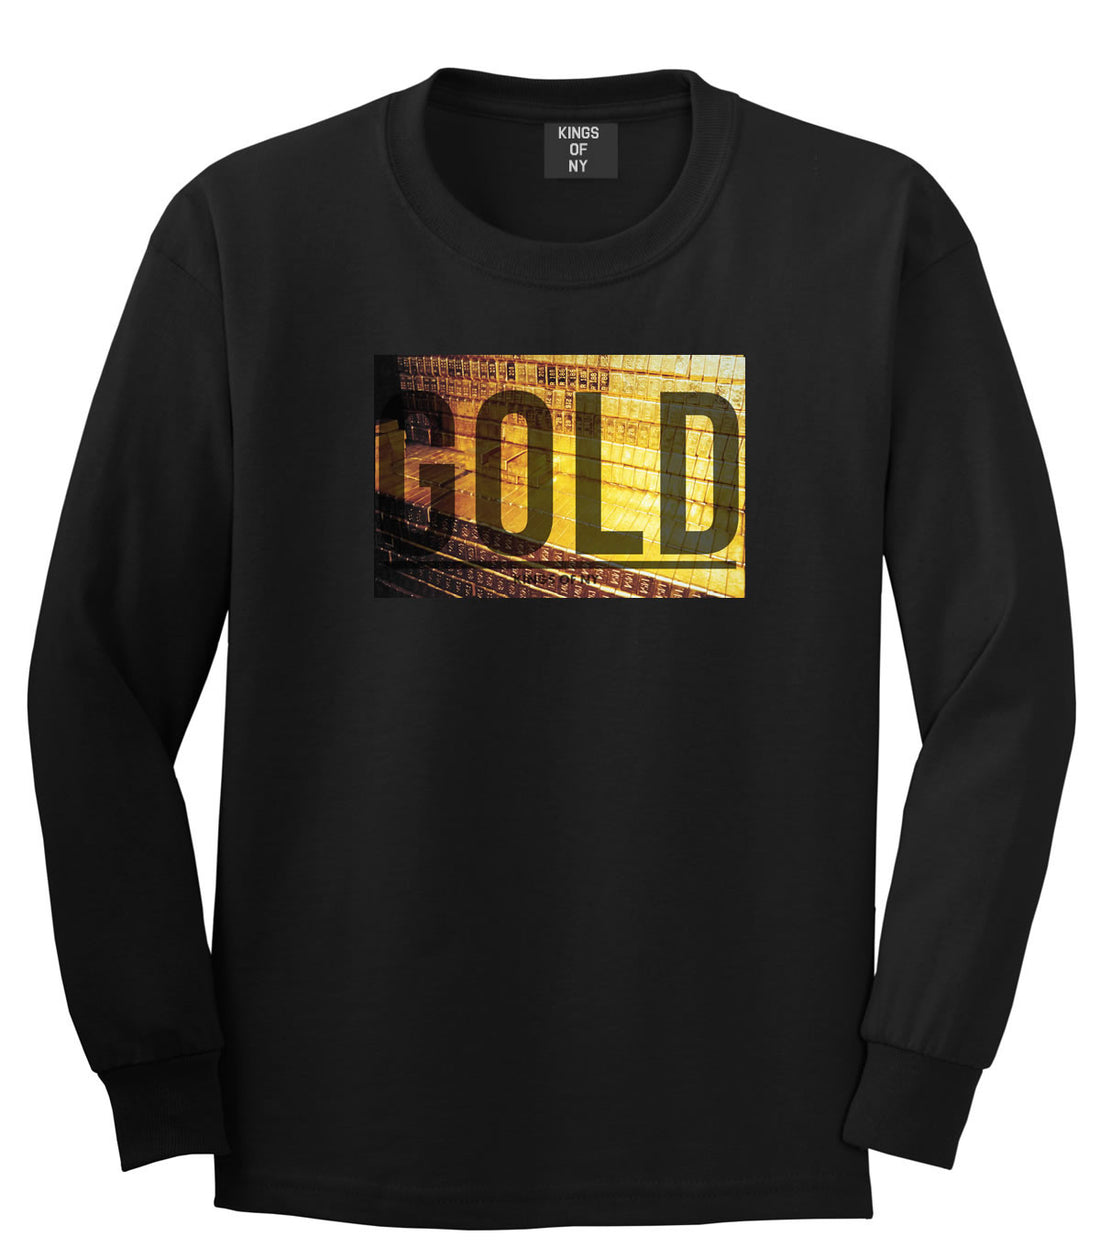 Gold Bricks Money Luxury Bank Cash Long Sleeve Boys Kids T-Shirt In Black by Kings Of NY